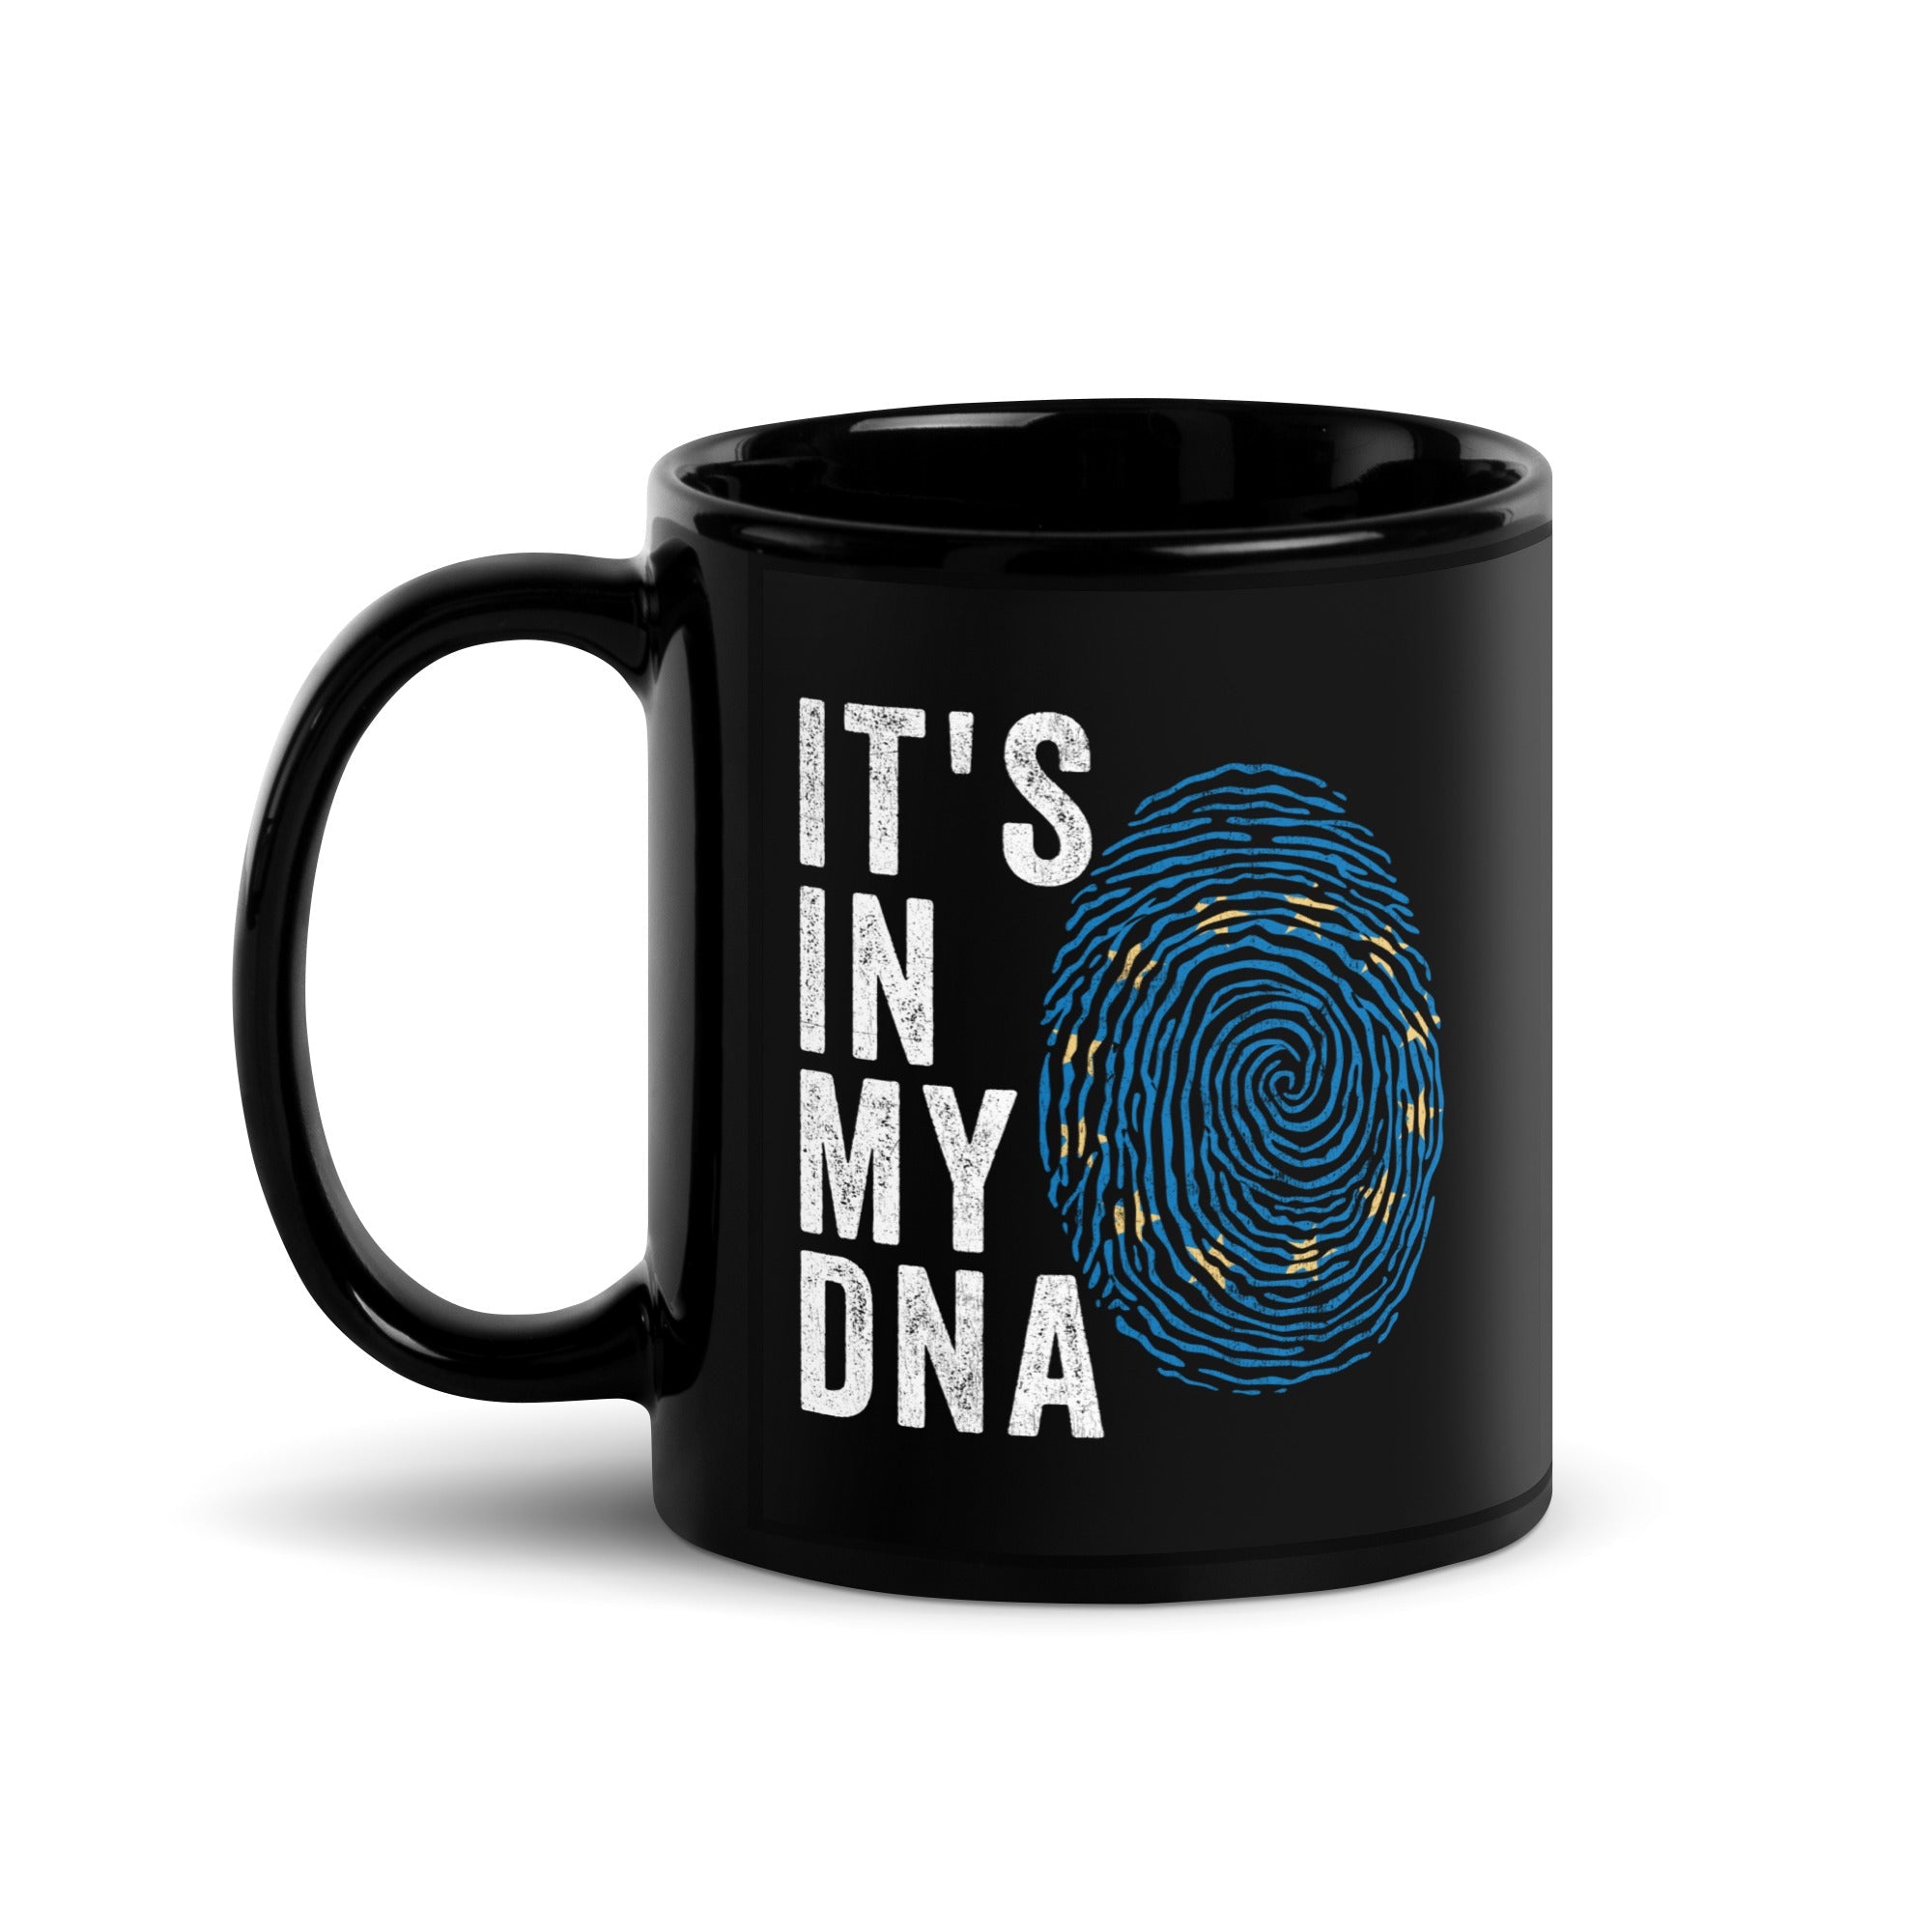 It's In My DNA - European Union Flag Mug